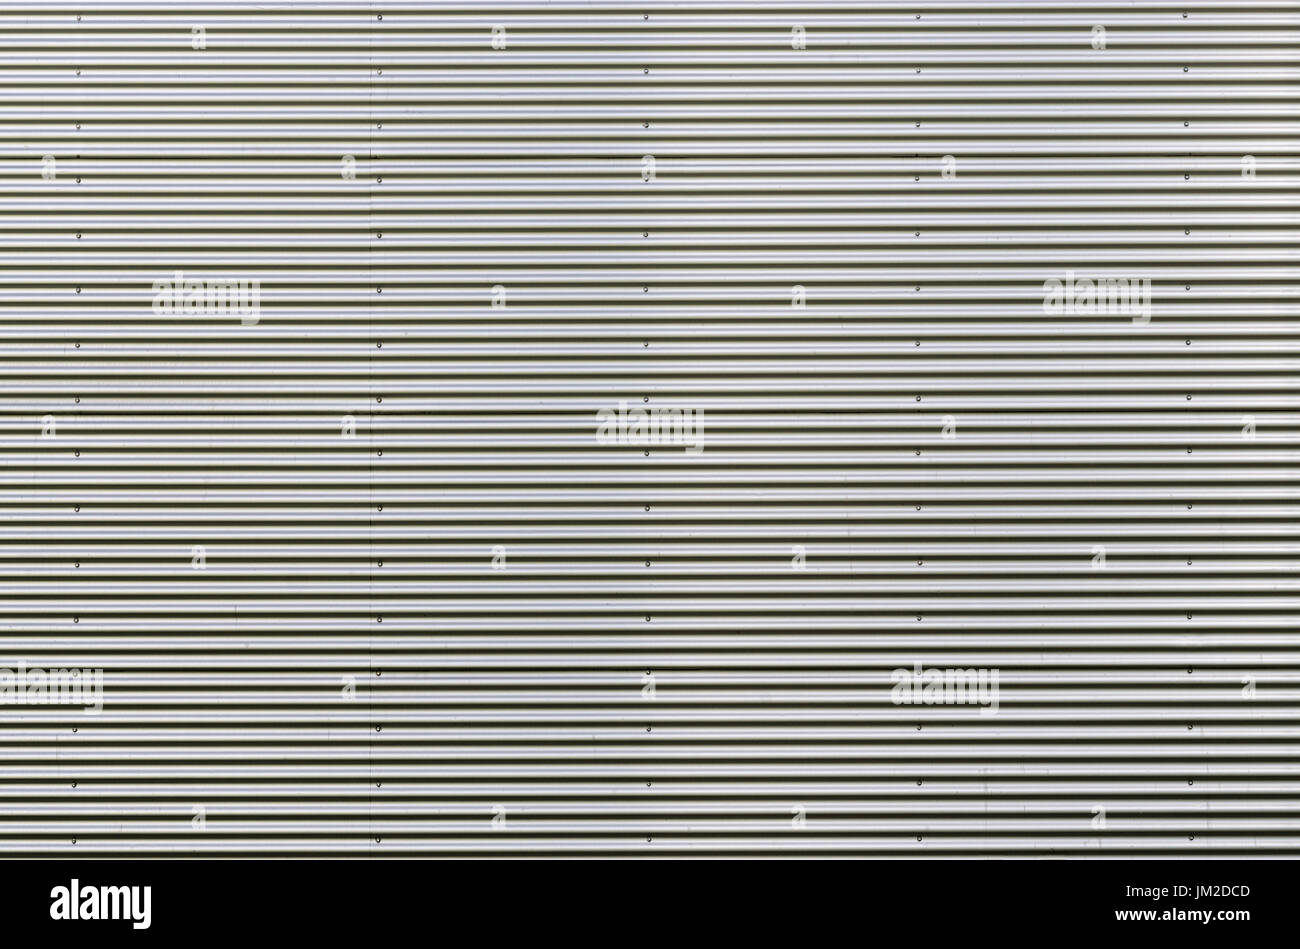 Corrugated metal sheet. Silver gray background pattern. Stock Photo